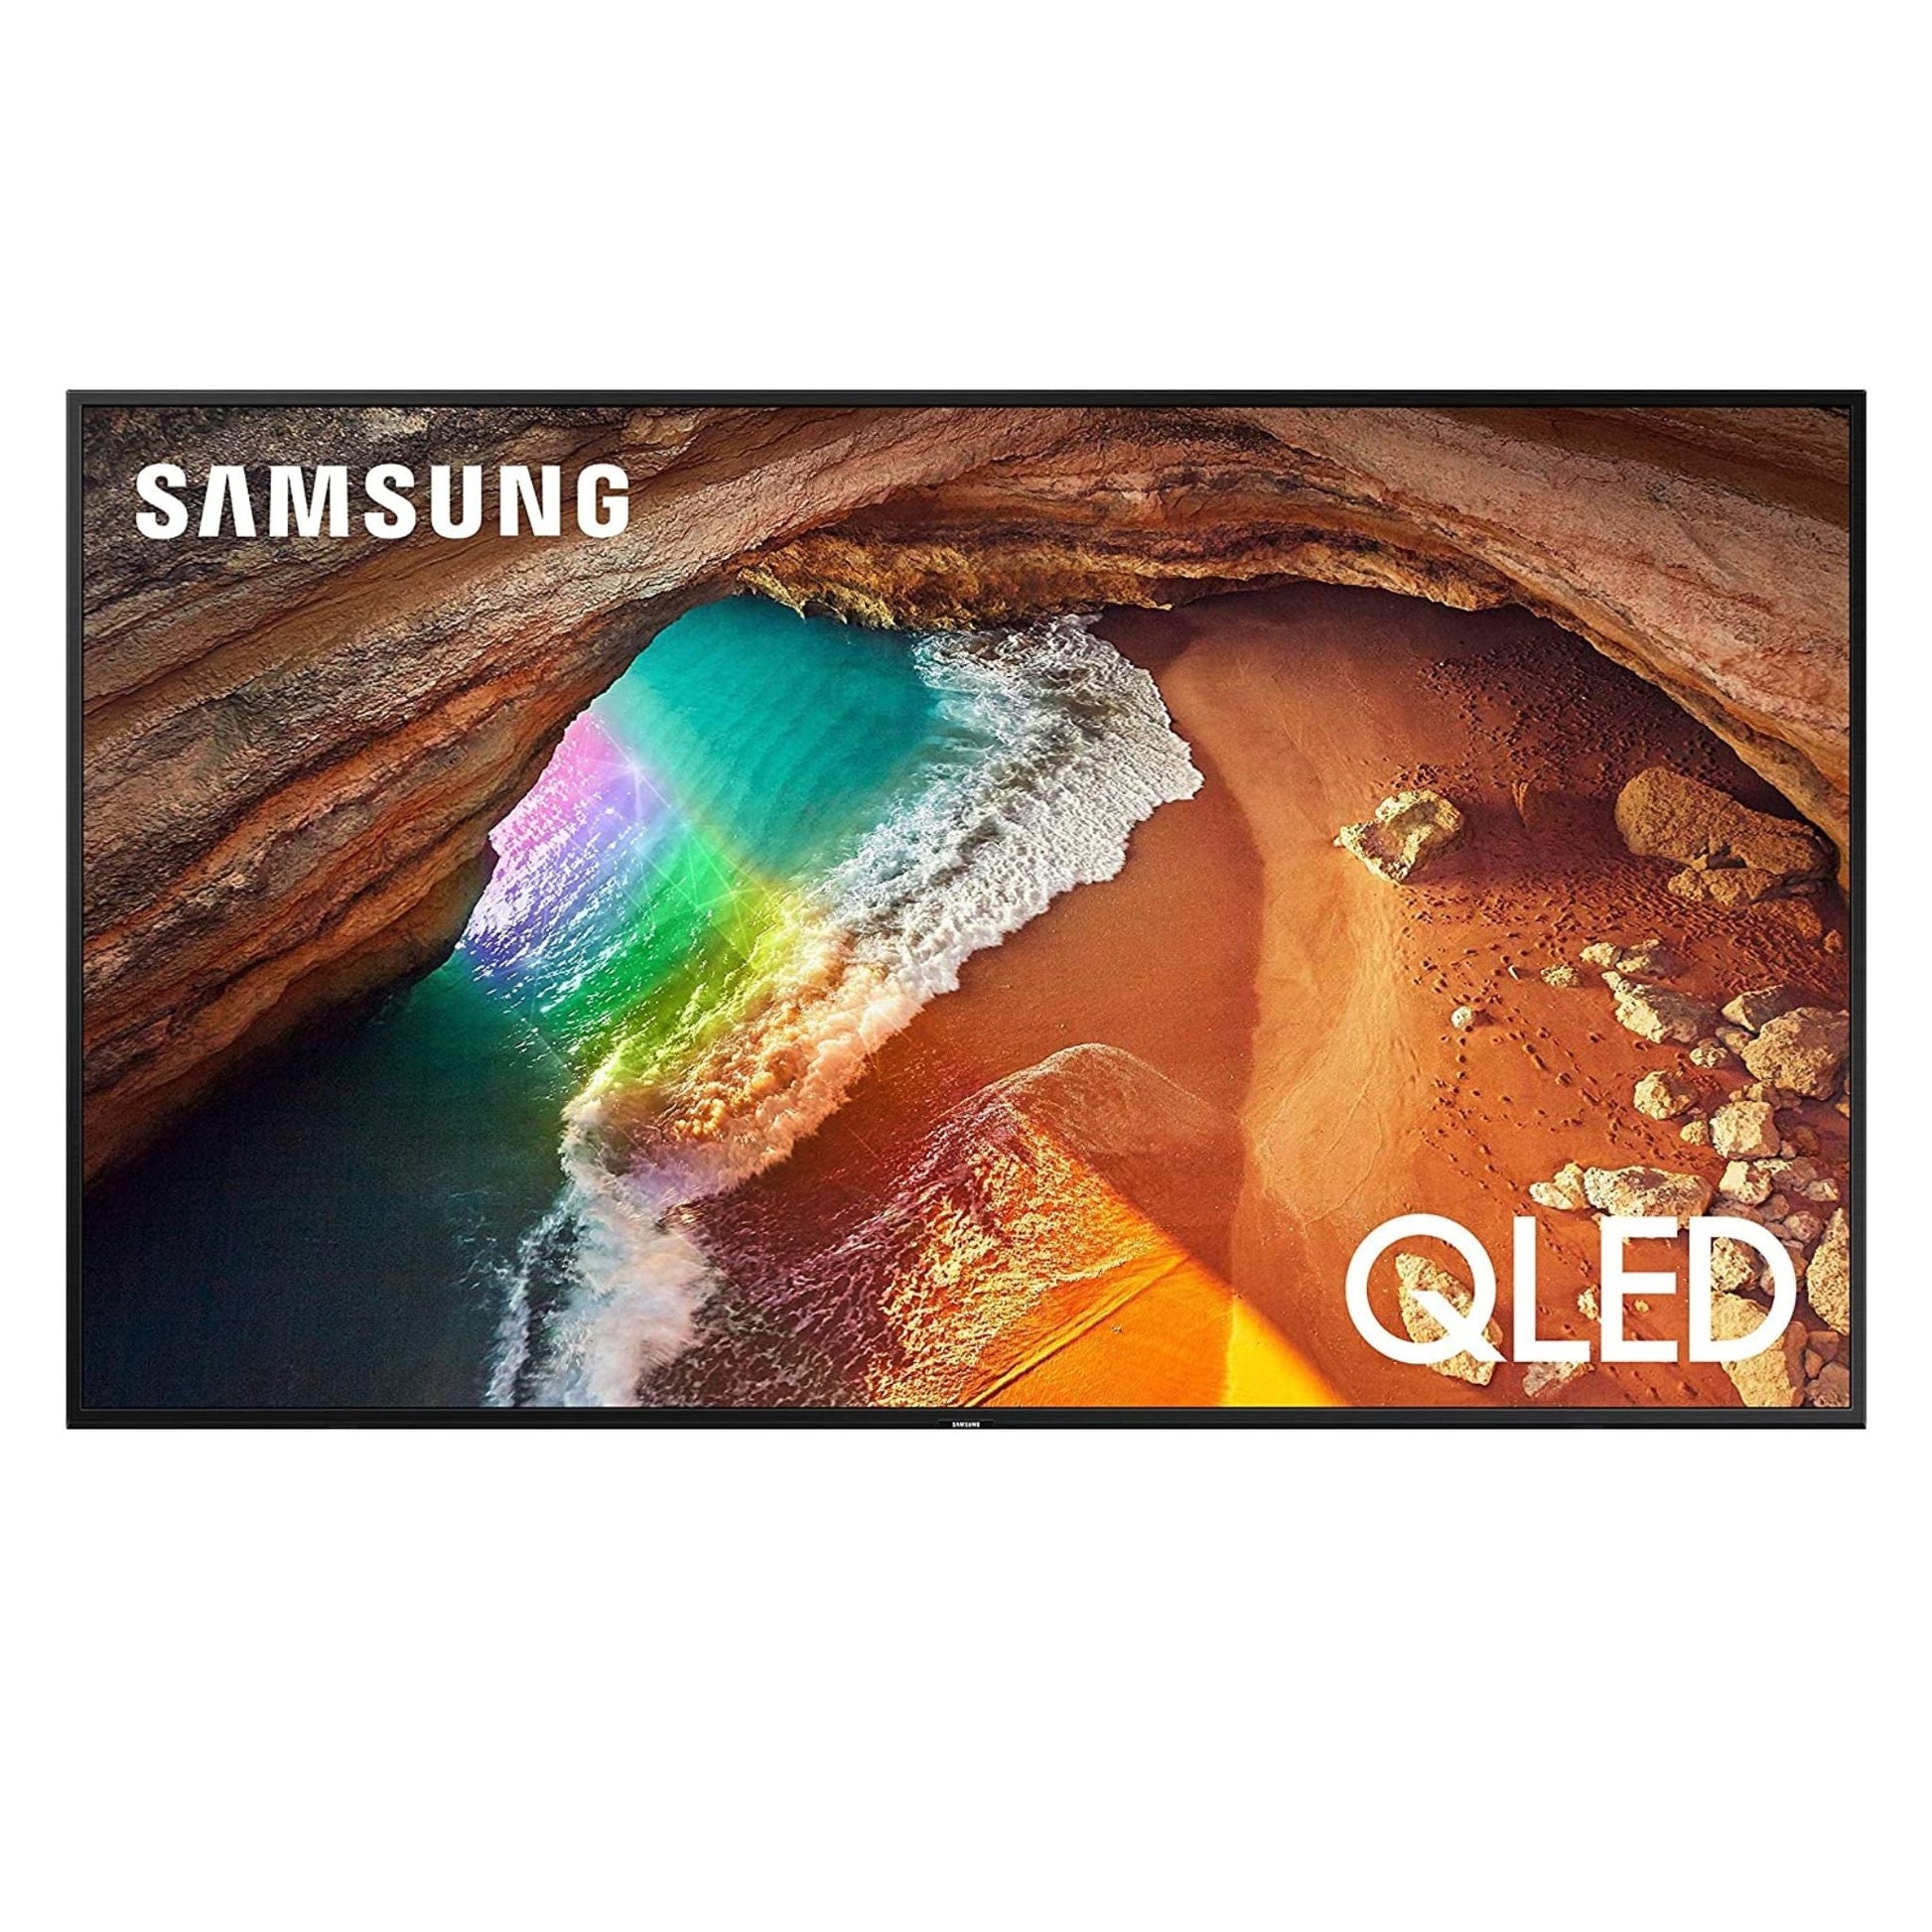 Samsung 82 inch Smart QLED TV, 82Q60R